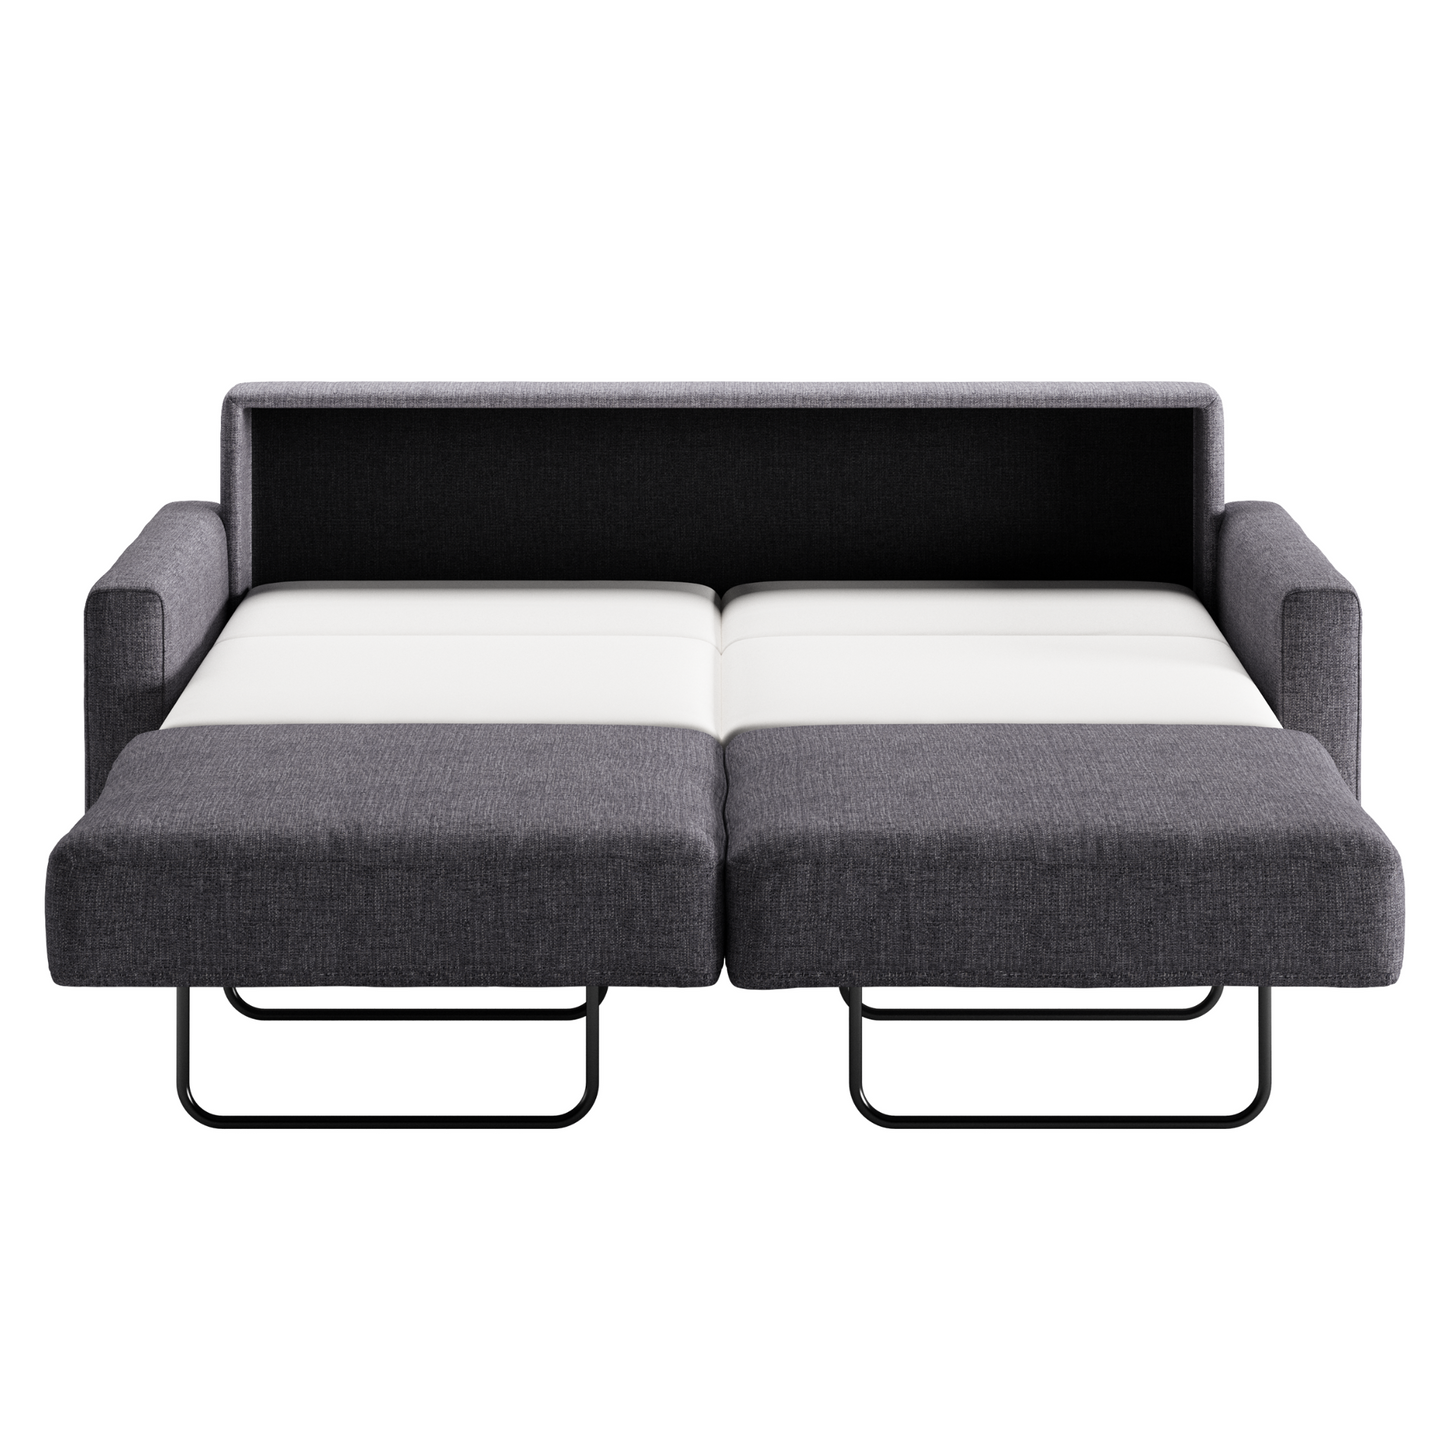 Luonto Nico Queen Sleeper Sofa Quick Ship Program in Rene 04 Fabric (charcoal) with Open Sleeper Bed